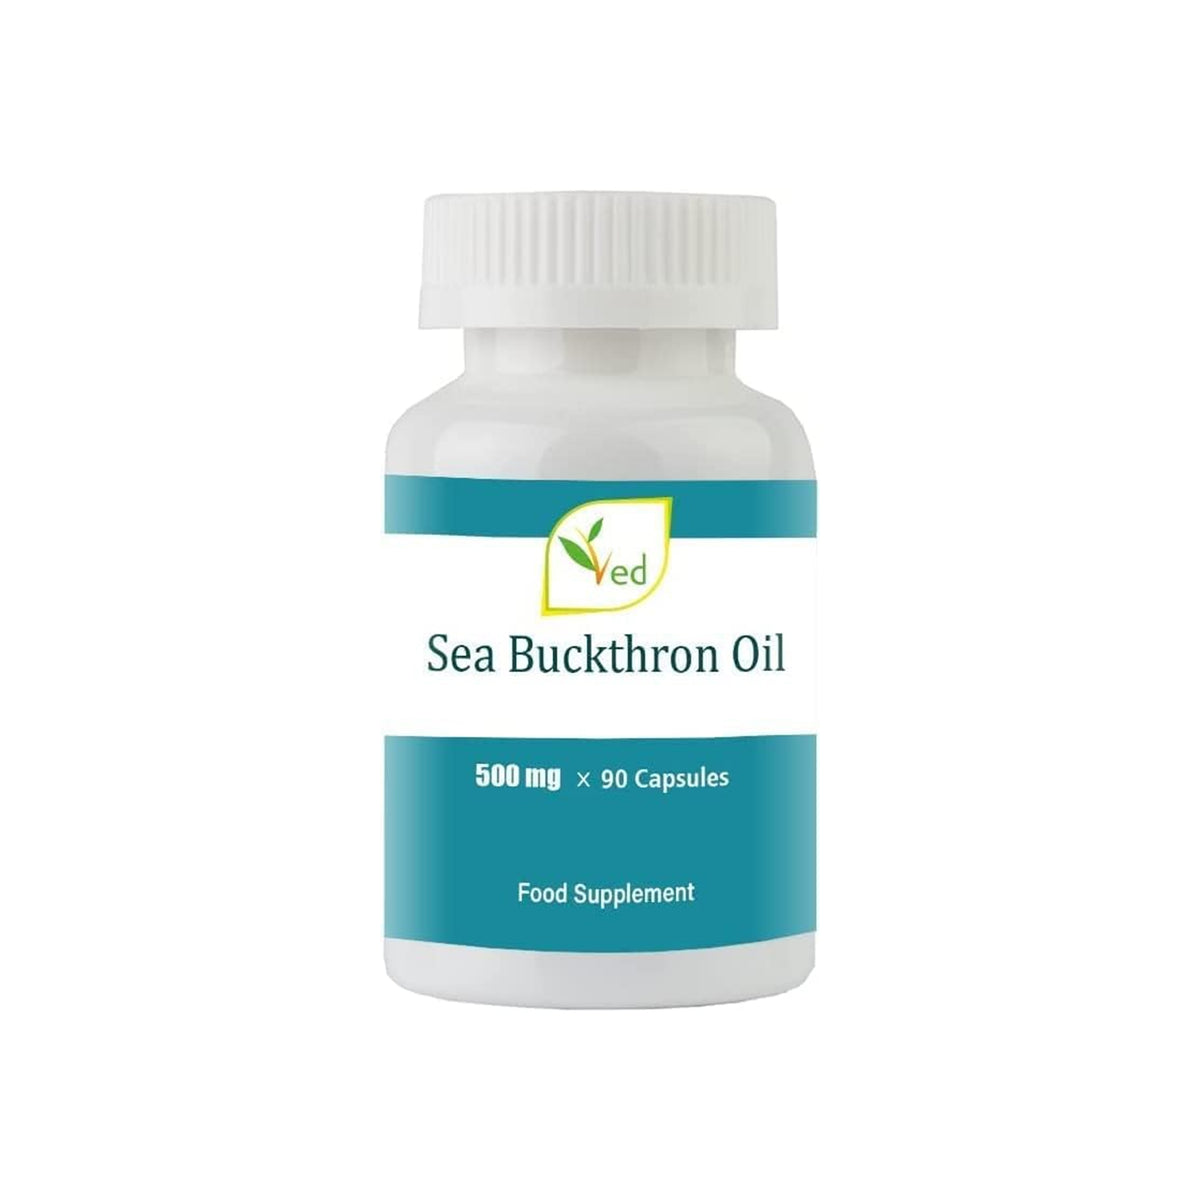 Sea Buckthorn Oil capsules 500 mg - 90 Capsules